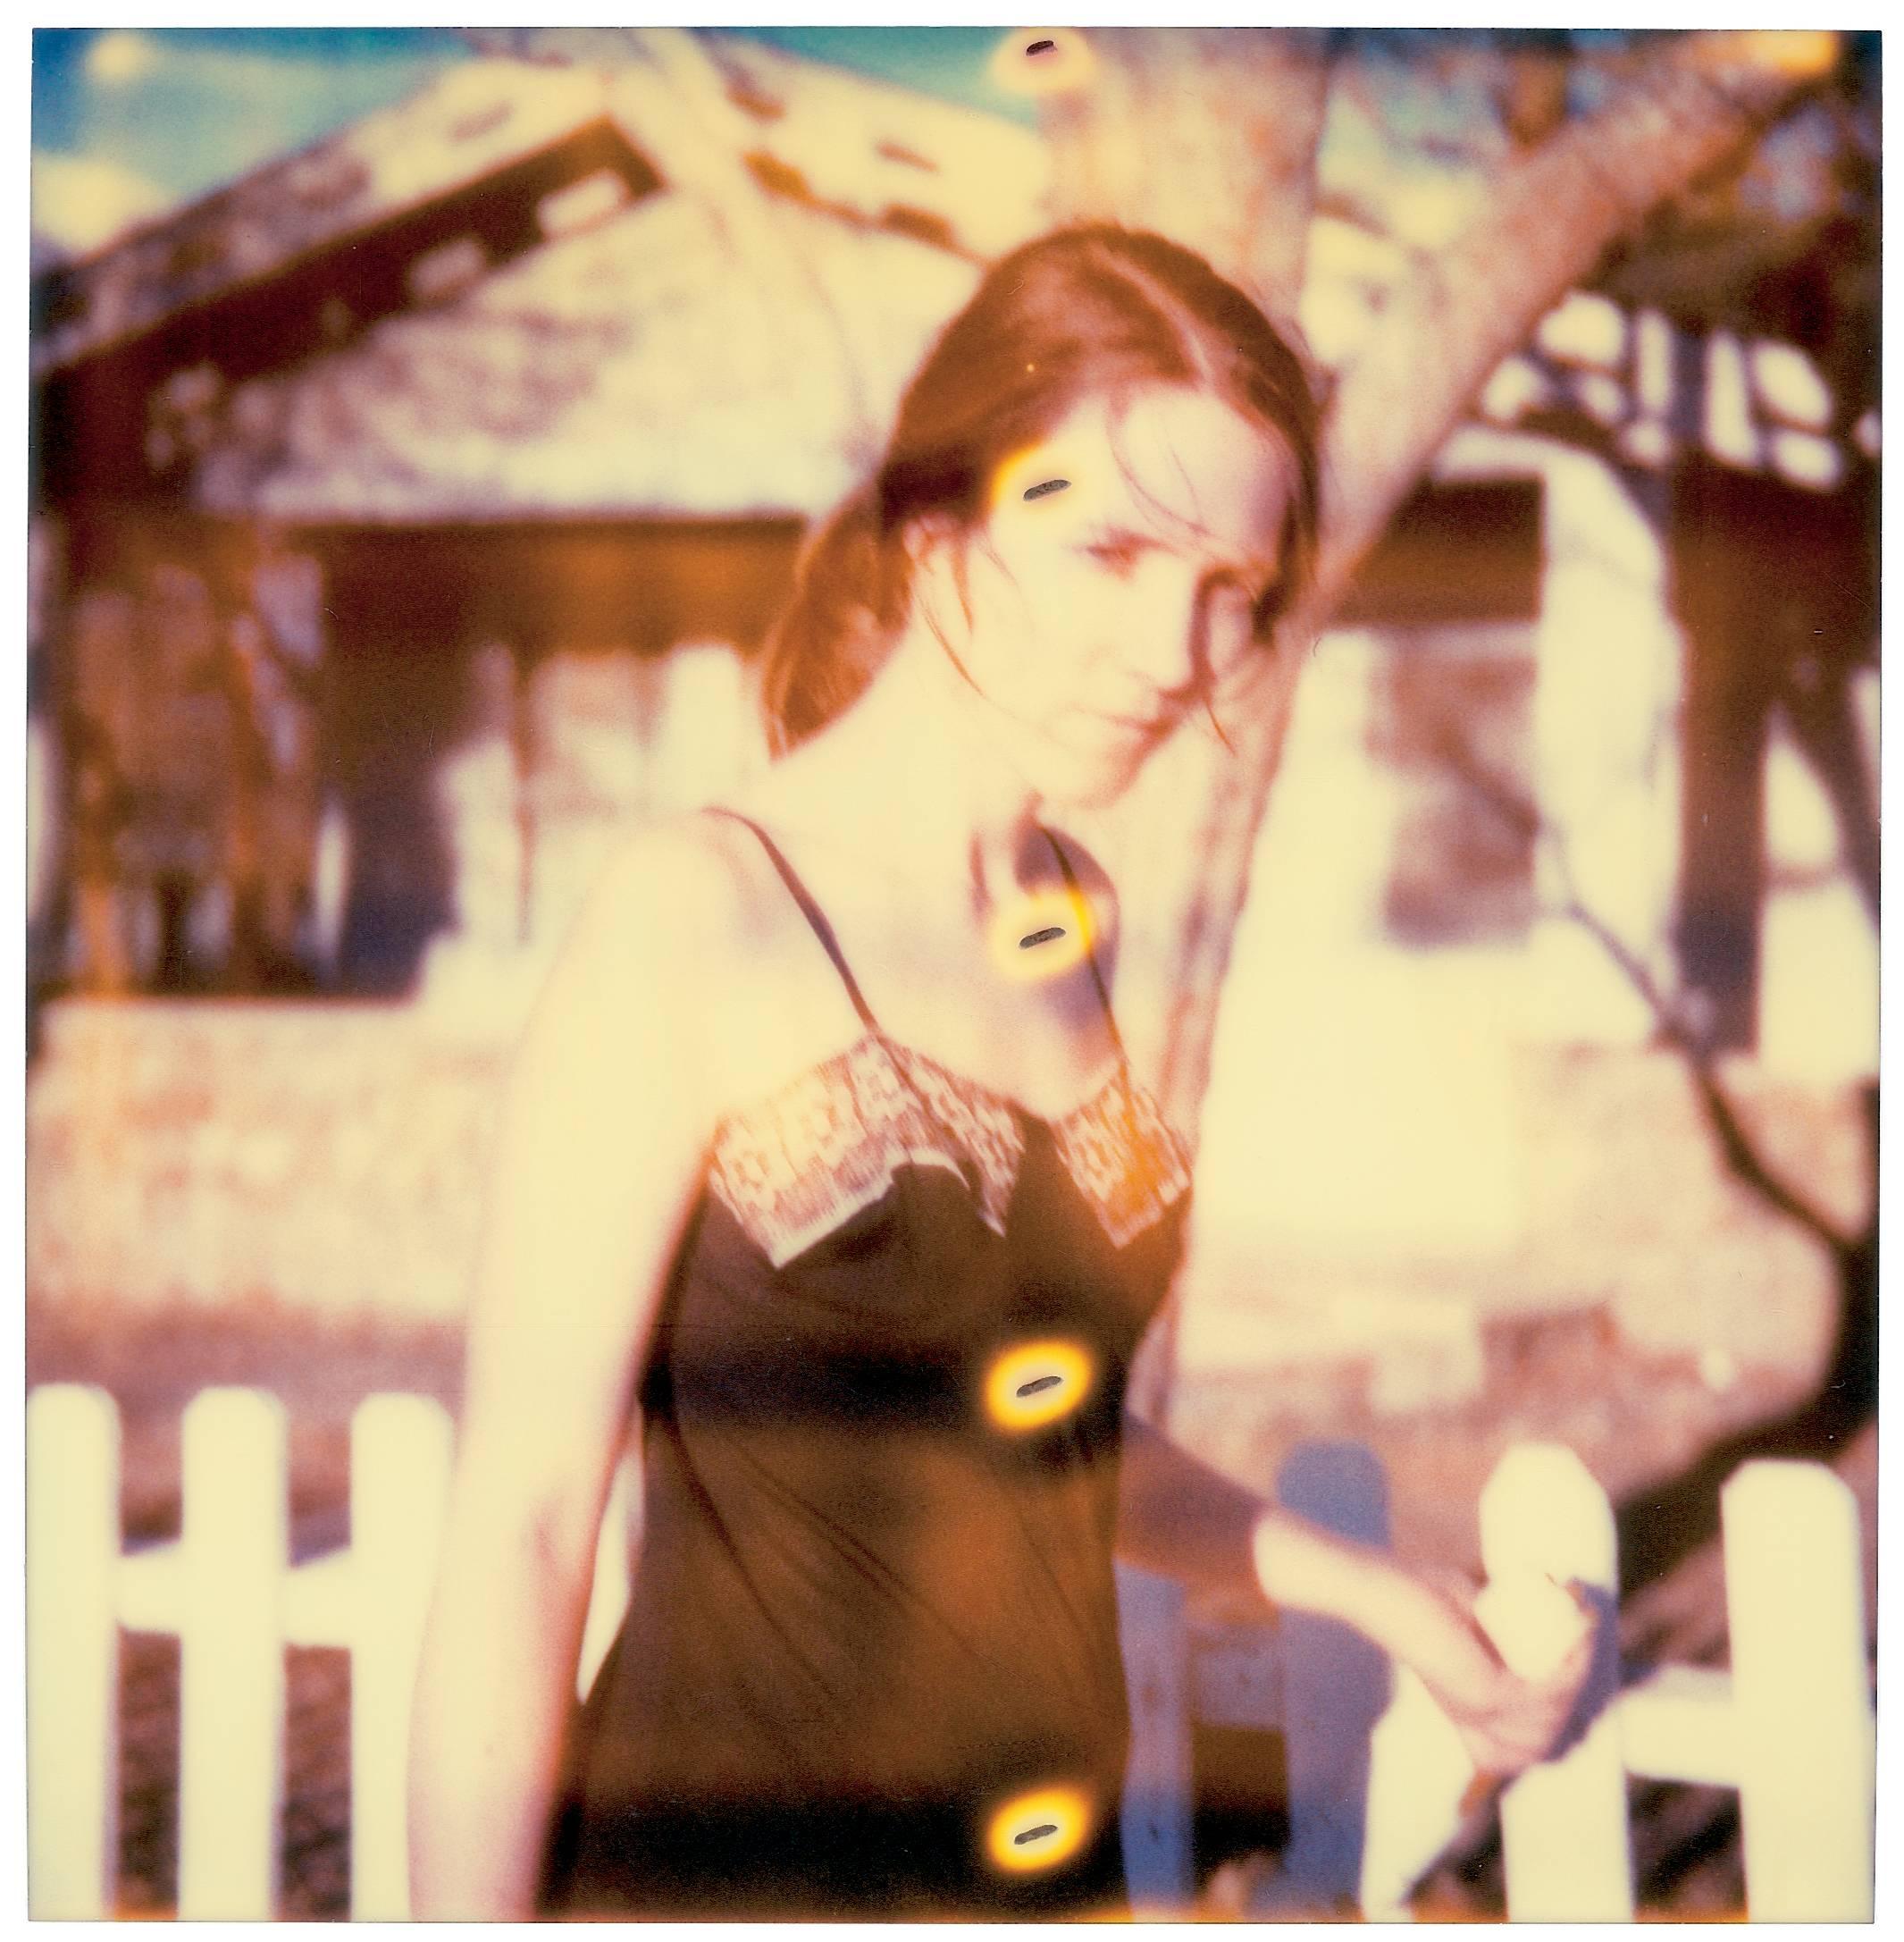 Portrait Photograph Stefanie Schneider - Girl at Fence III (The Last Picture Show)